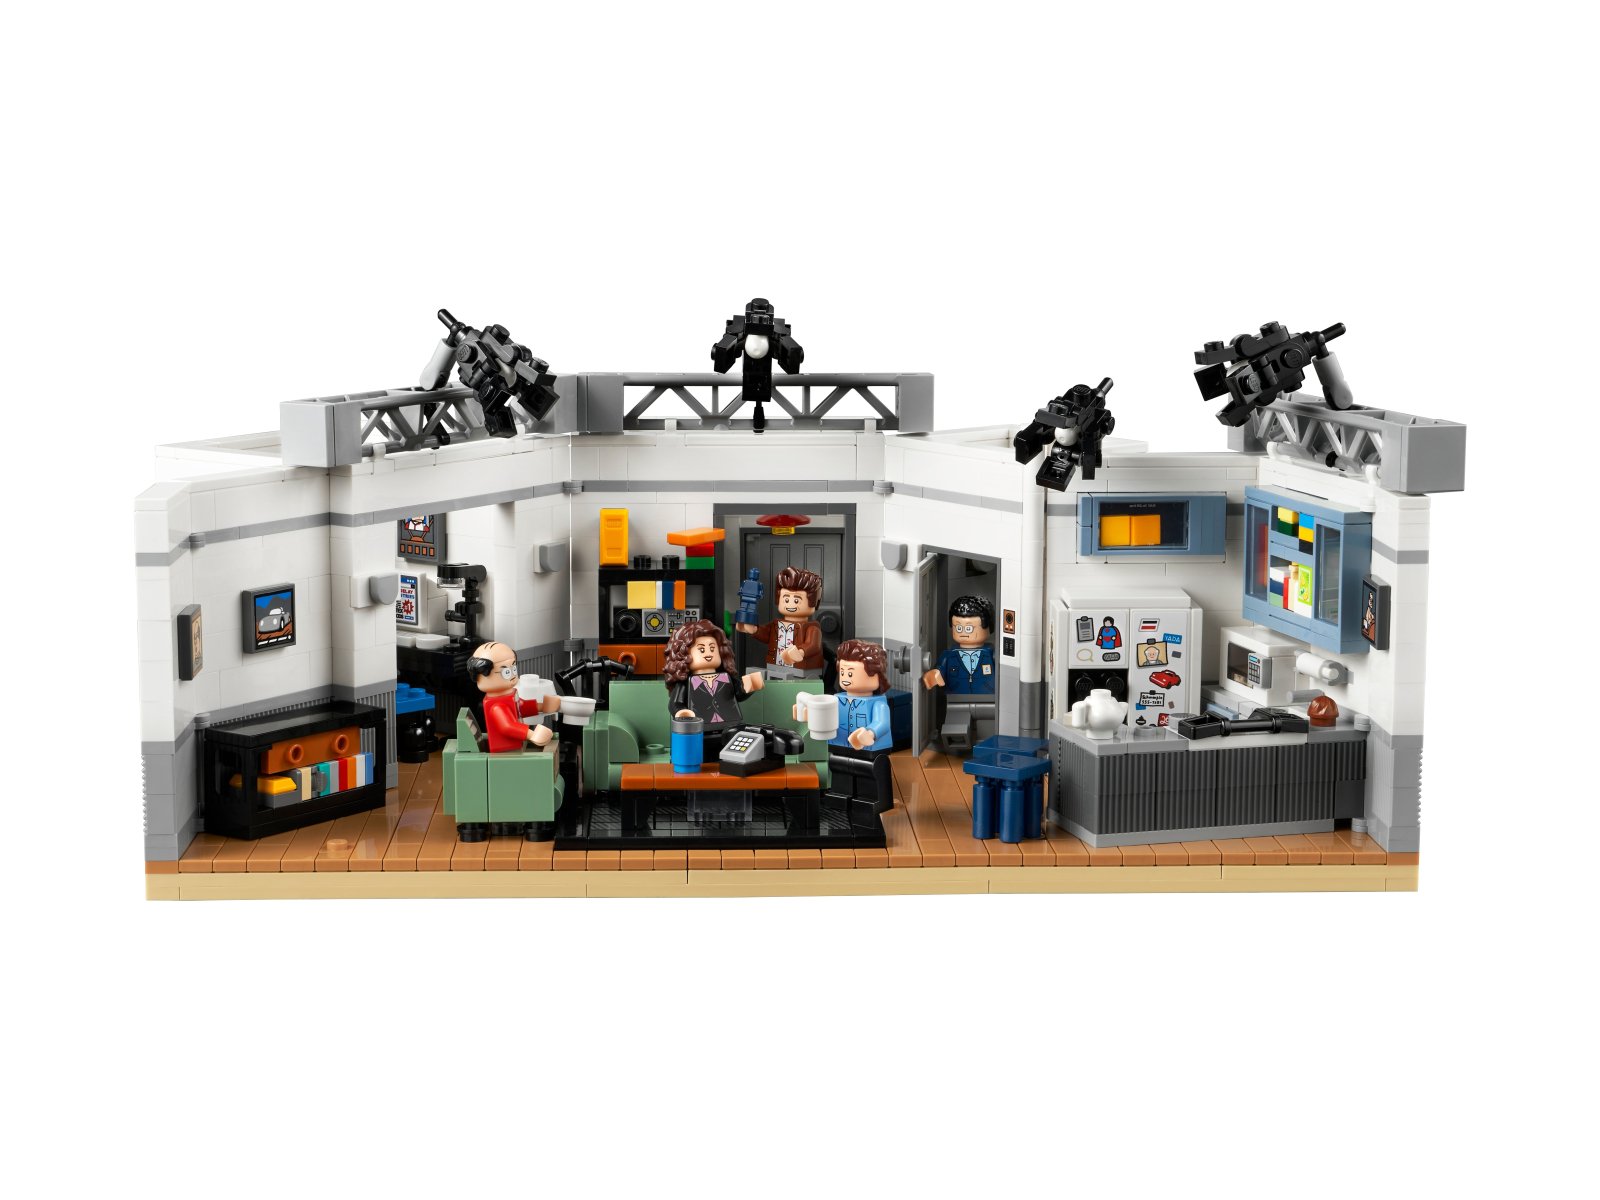 LEGO Ideas Seinfeld 21328